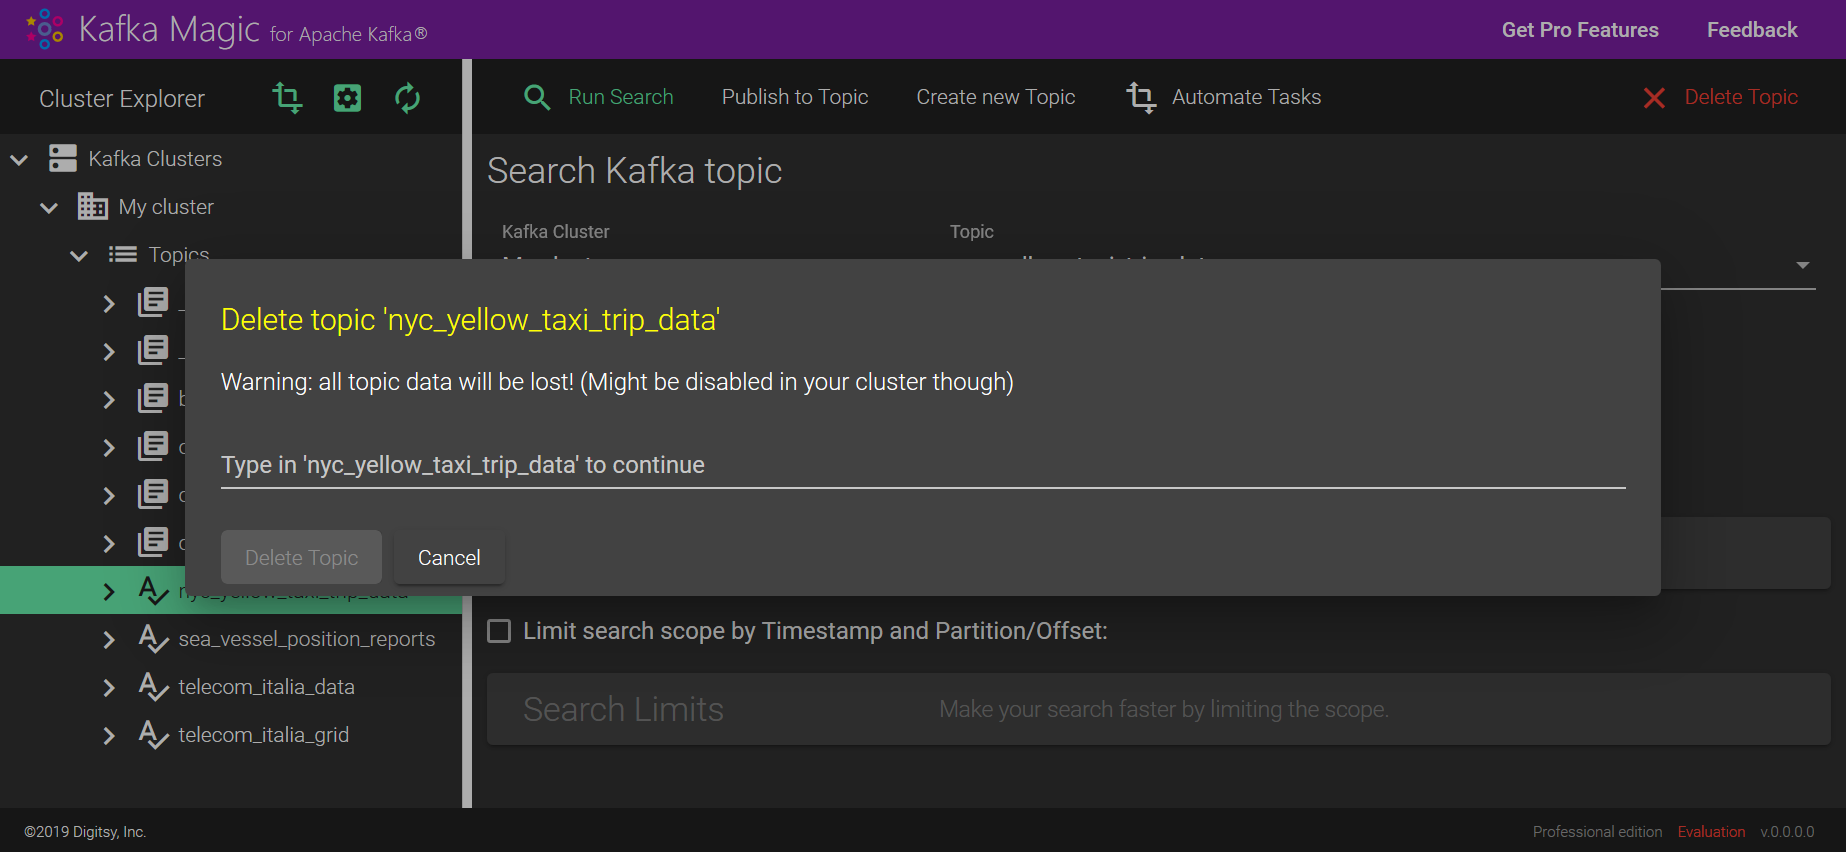 Kafka Magic: Delete topic through UI